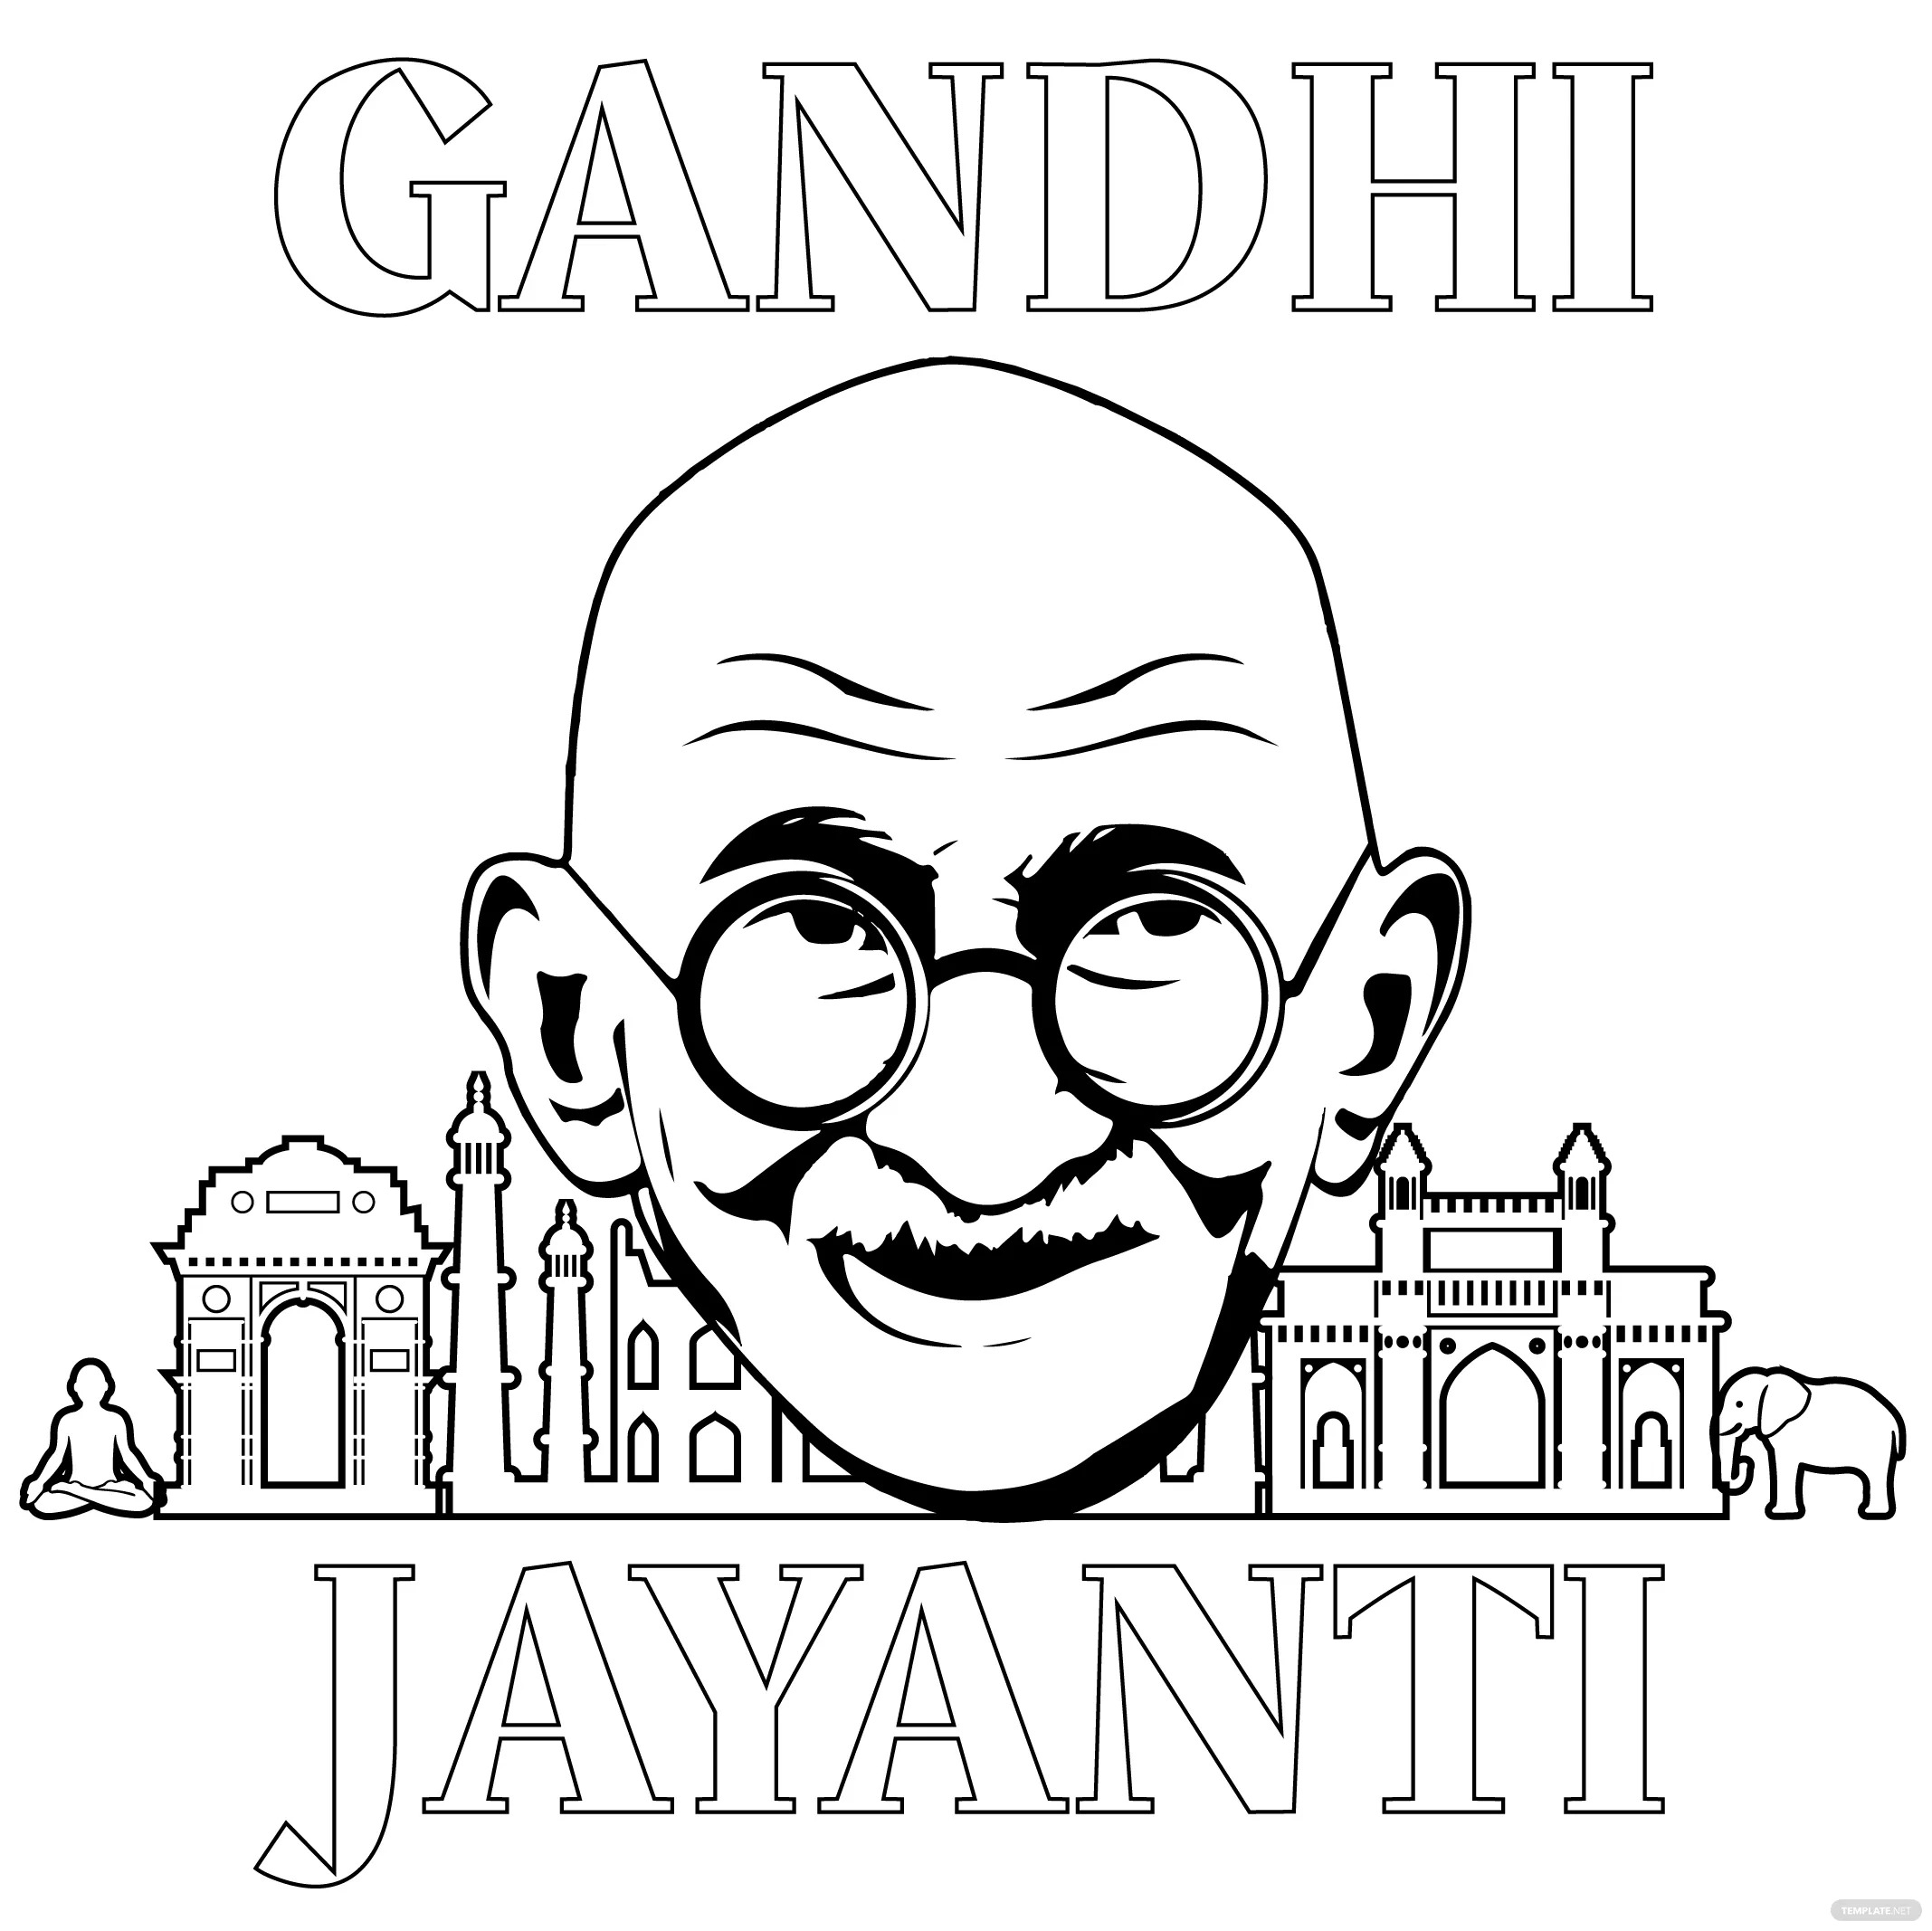 gandhi jayanti drawing vector ideas examples